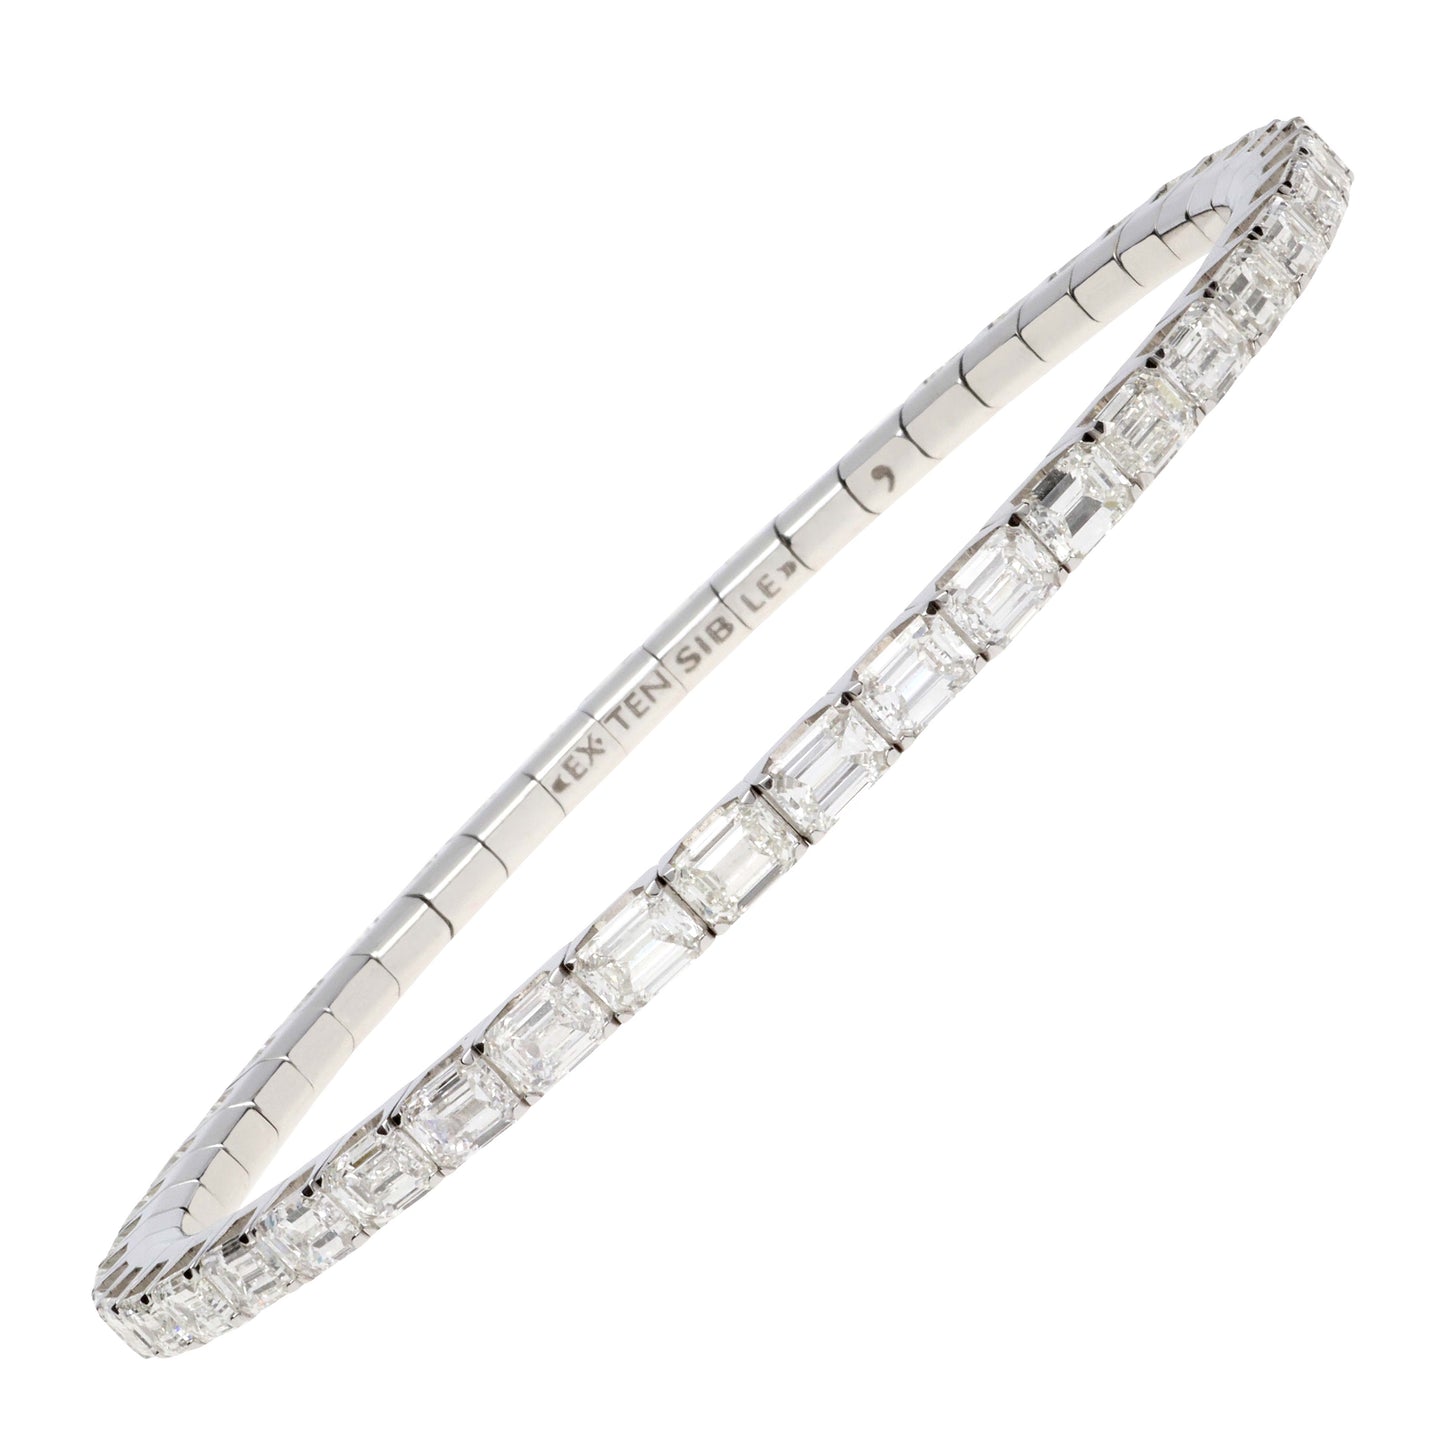 12.5 CT Emerald Cut White Diamond Stretch Bracelet